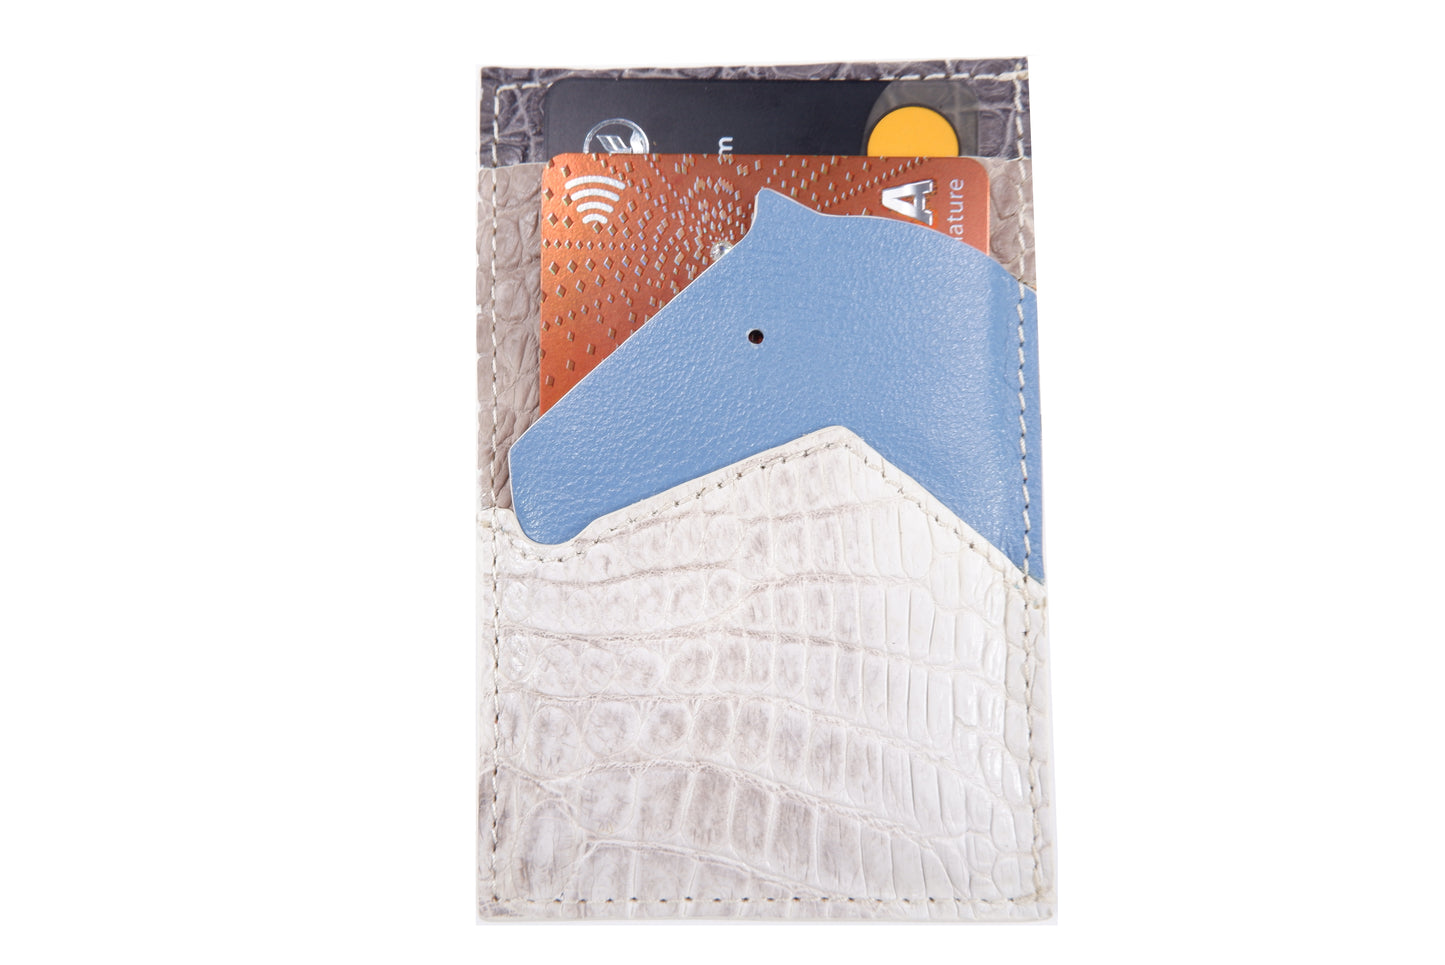 Genuine Crocodile Skin Leather Slim Vertical Business & Credit Card Holder Sleeve Wallet with Hidalgo Horse Design